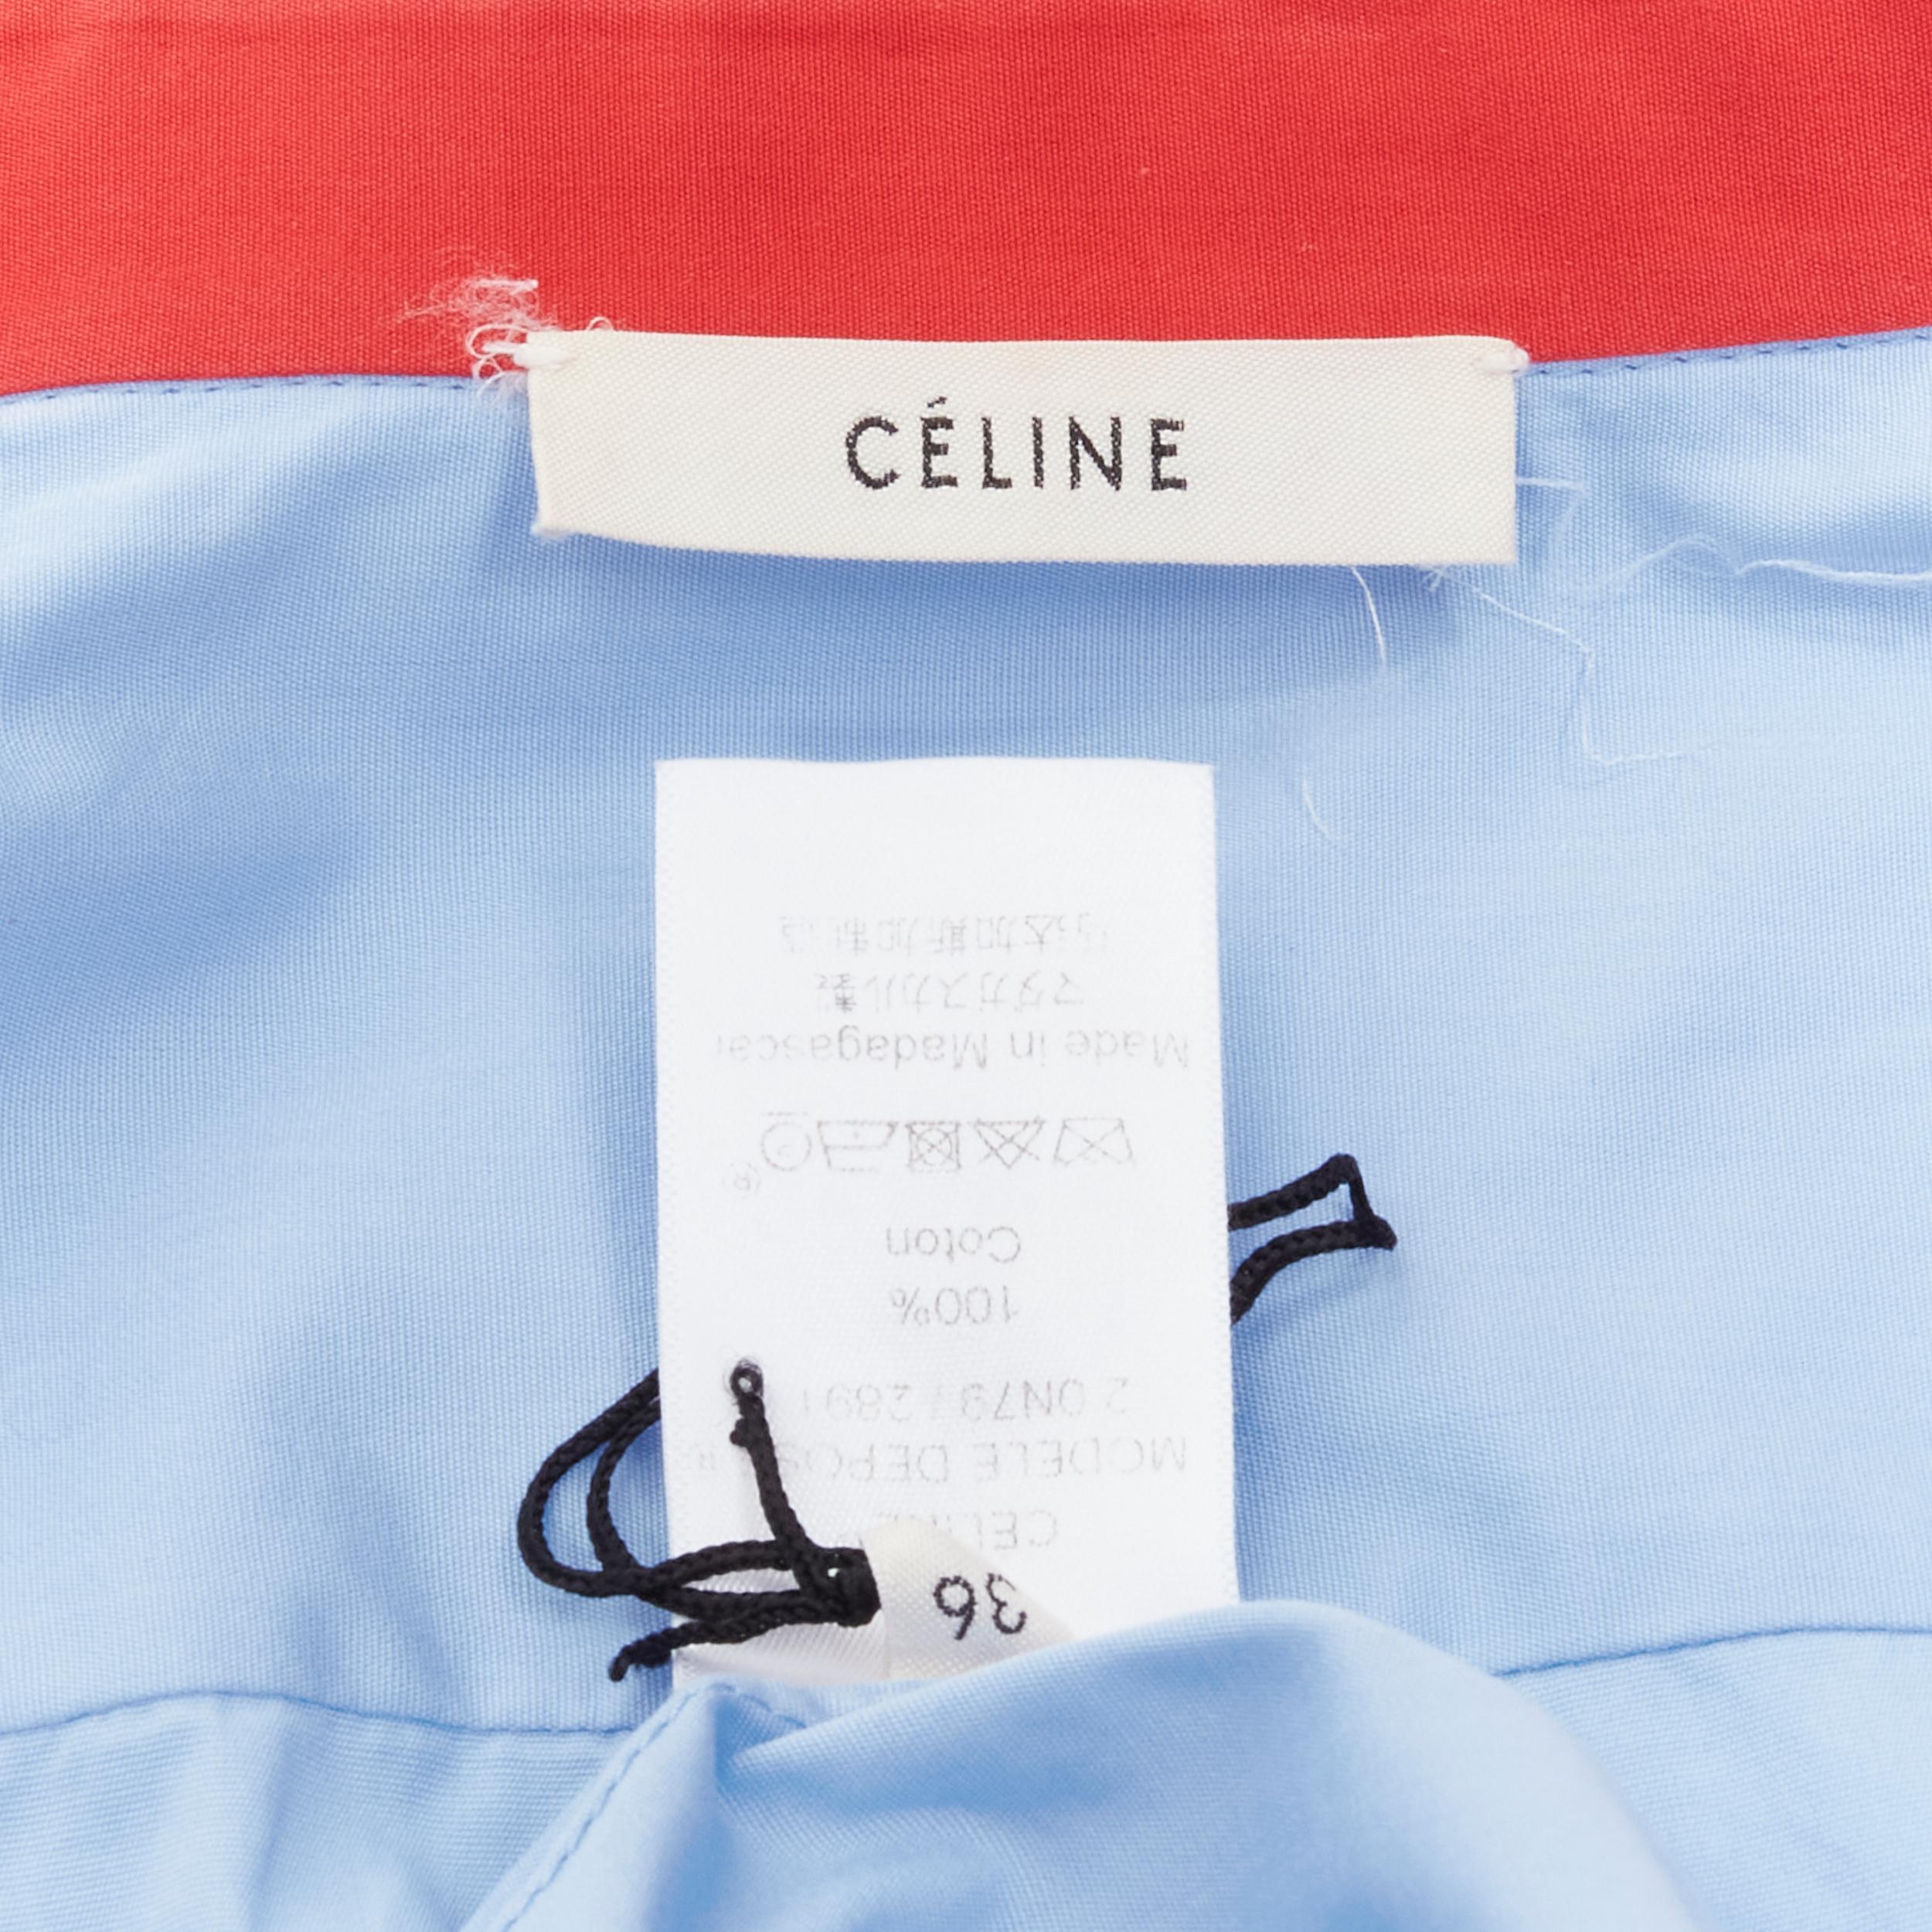 OLD CELINE Phoebe Philo blue red lined collar slim fit shirt FR36 XS 3